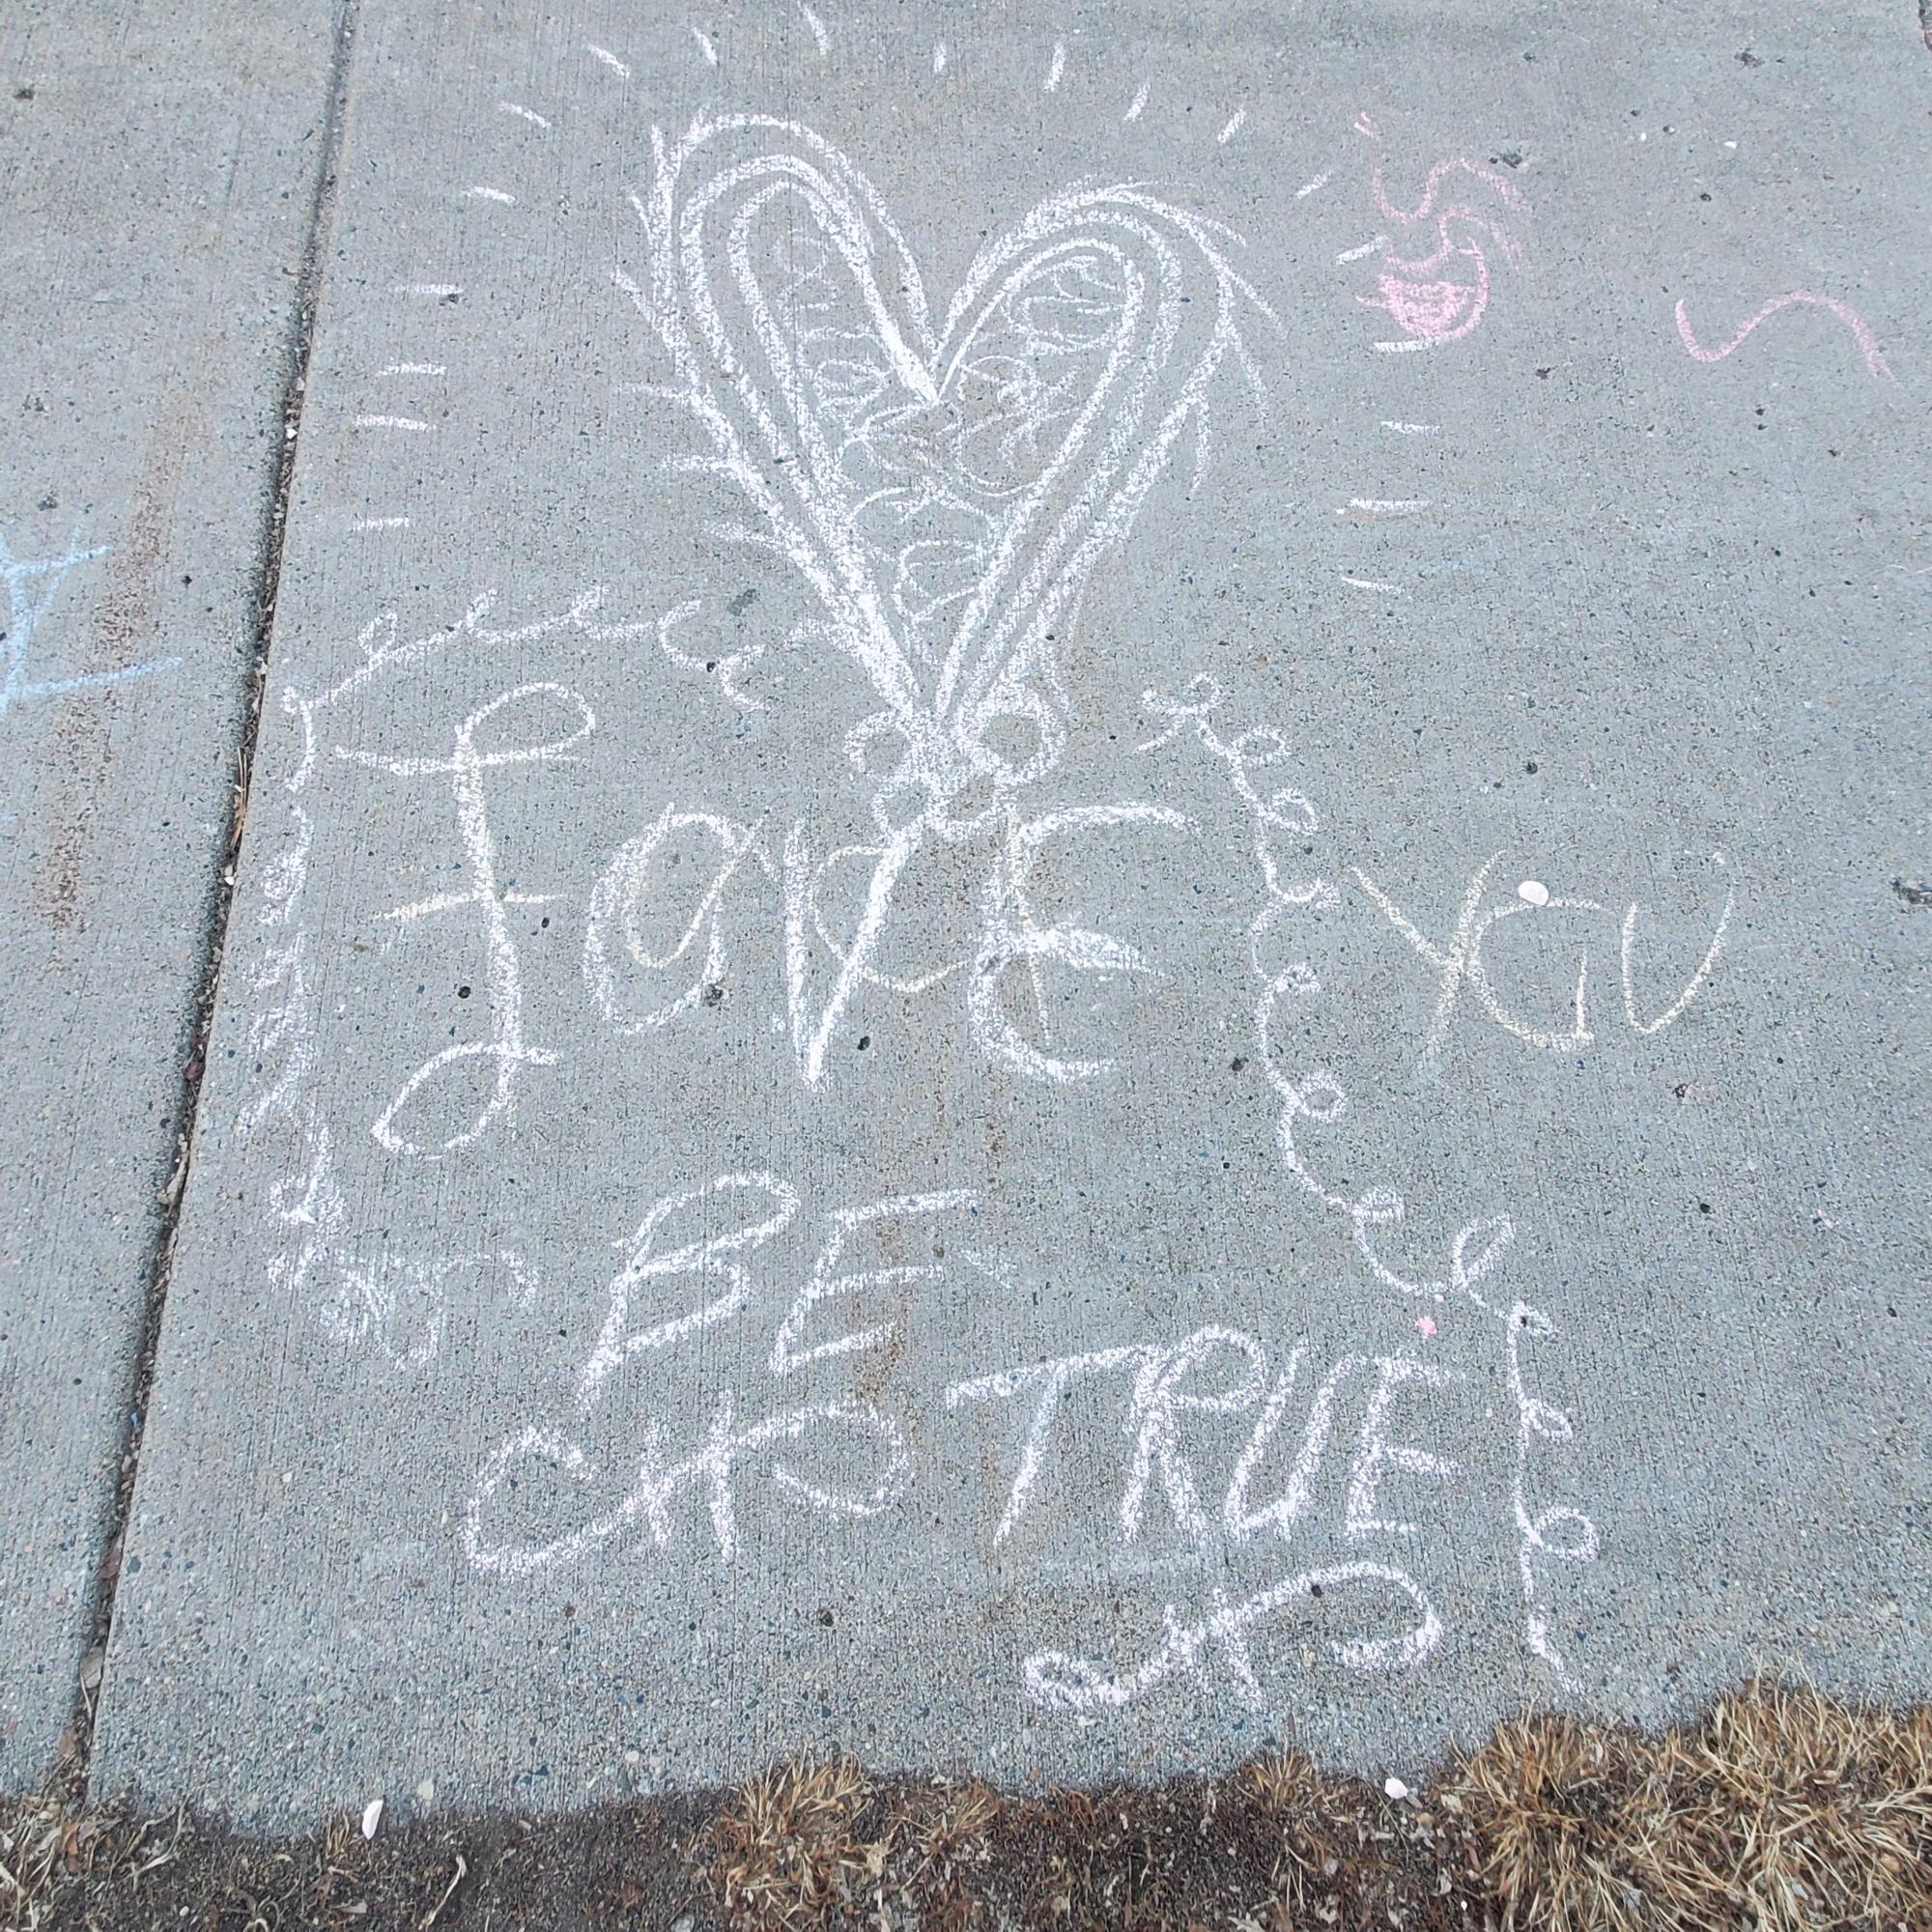 "Love you - Be True" Sidewalk art